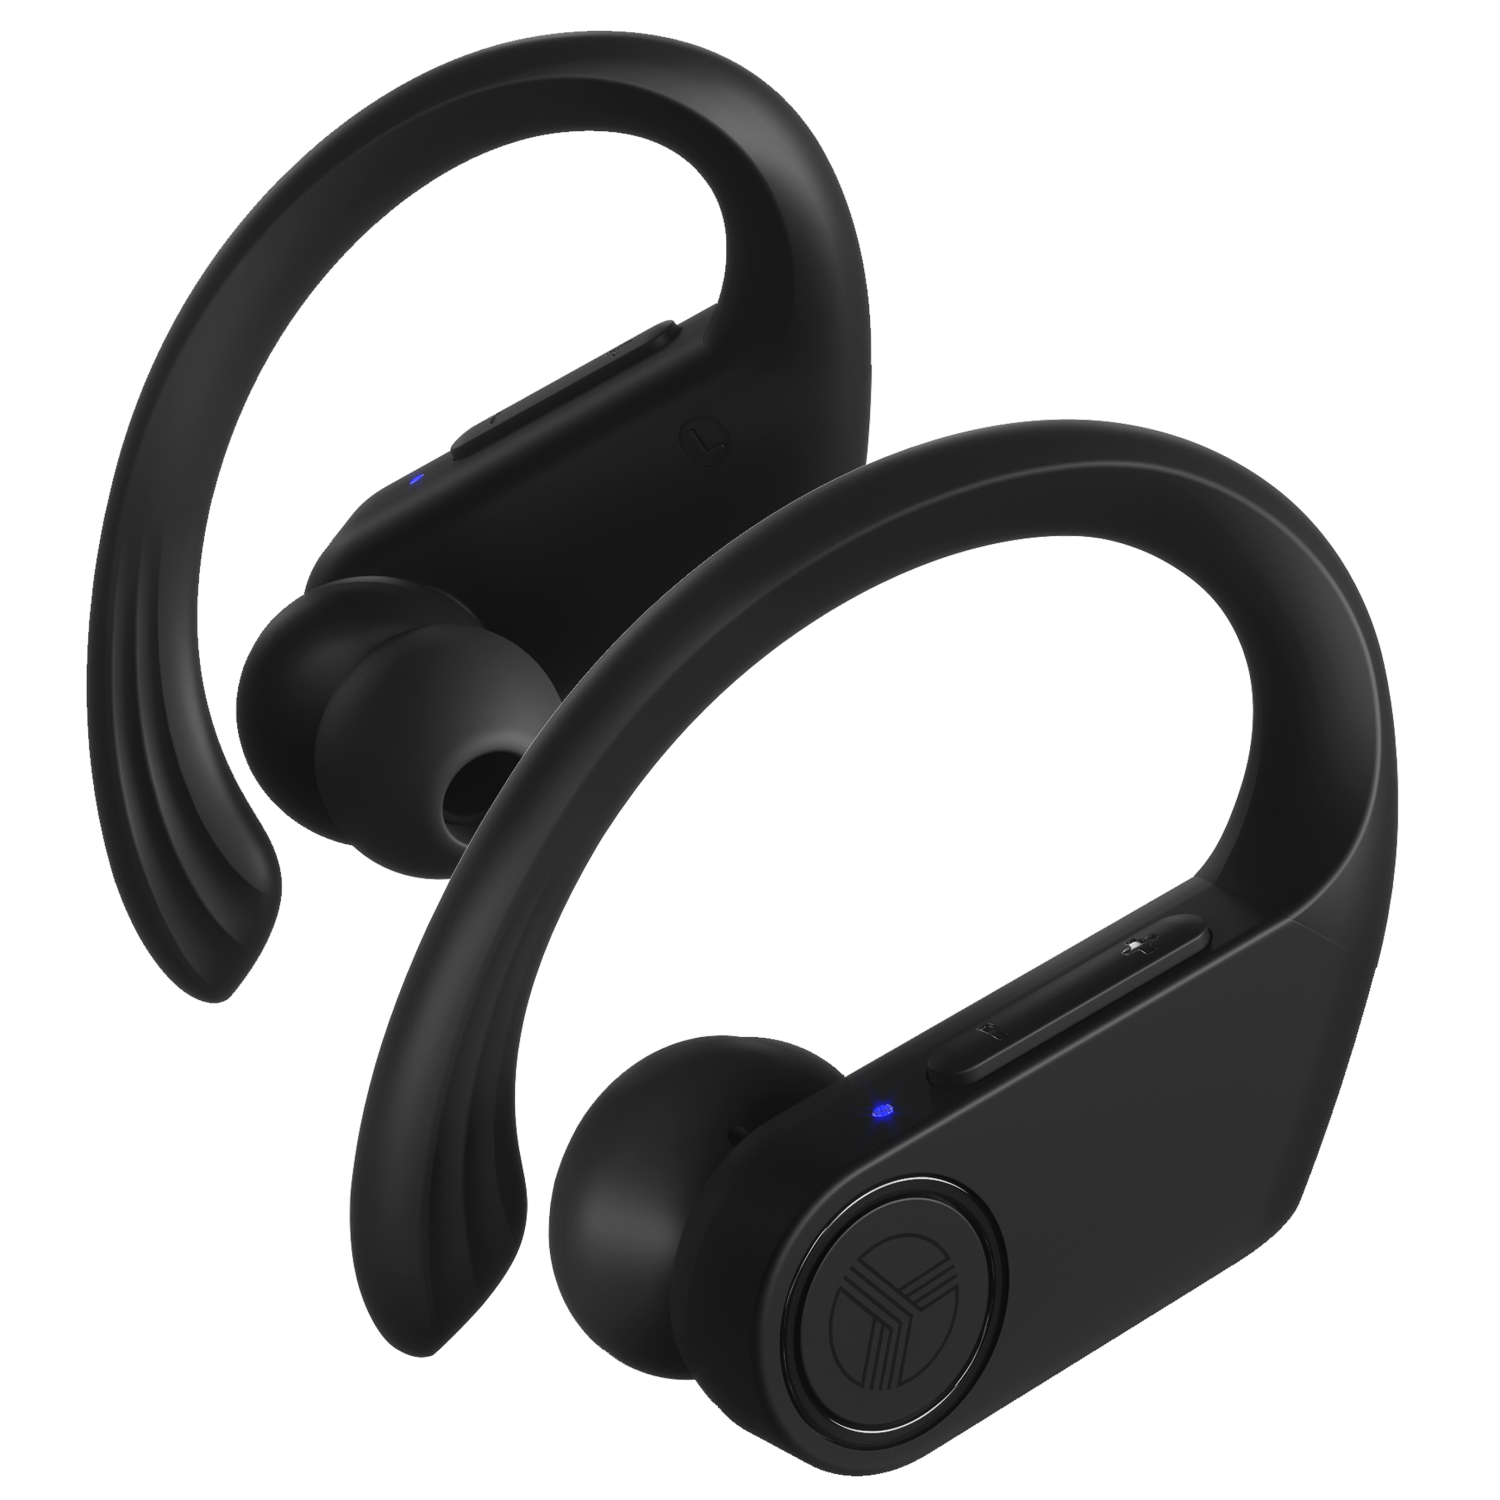 Treblab X3 Pro - True Wireless Earbuds with Earhooks - 45H Battery Life, Bluetooth 5.0 with aptX, IPX7 Waterproof Headphones - TWS Bluetooth Earphones with Charging case (Renewed)